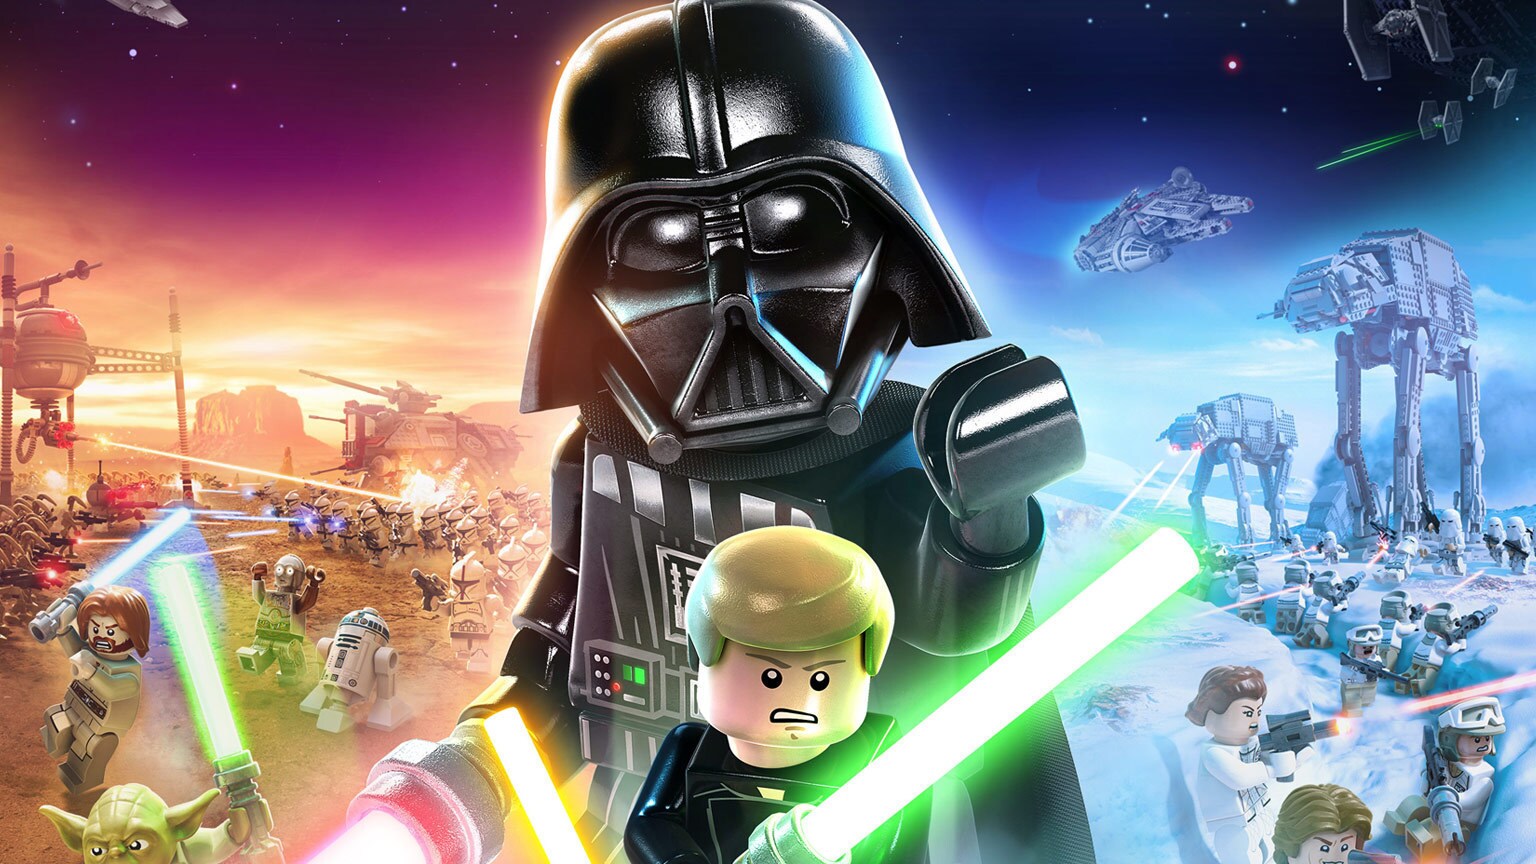 “We Were Always Going to Go Big!”: Inside LEGO Star Wars: The Skywalker Saga